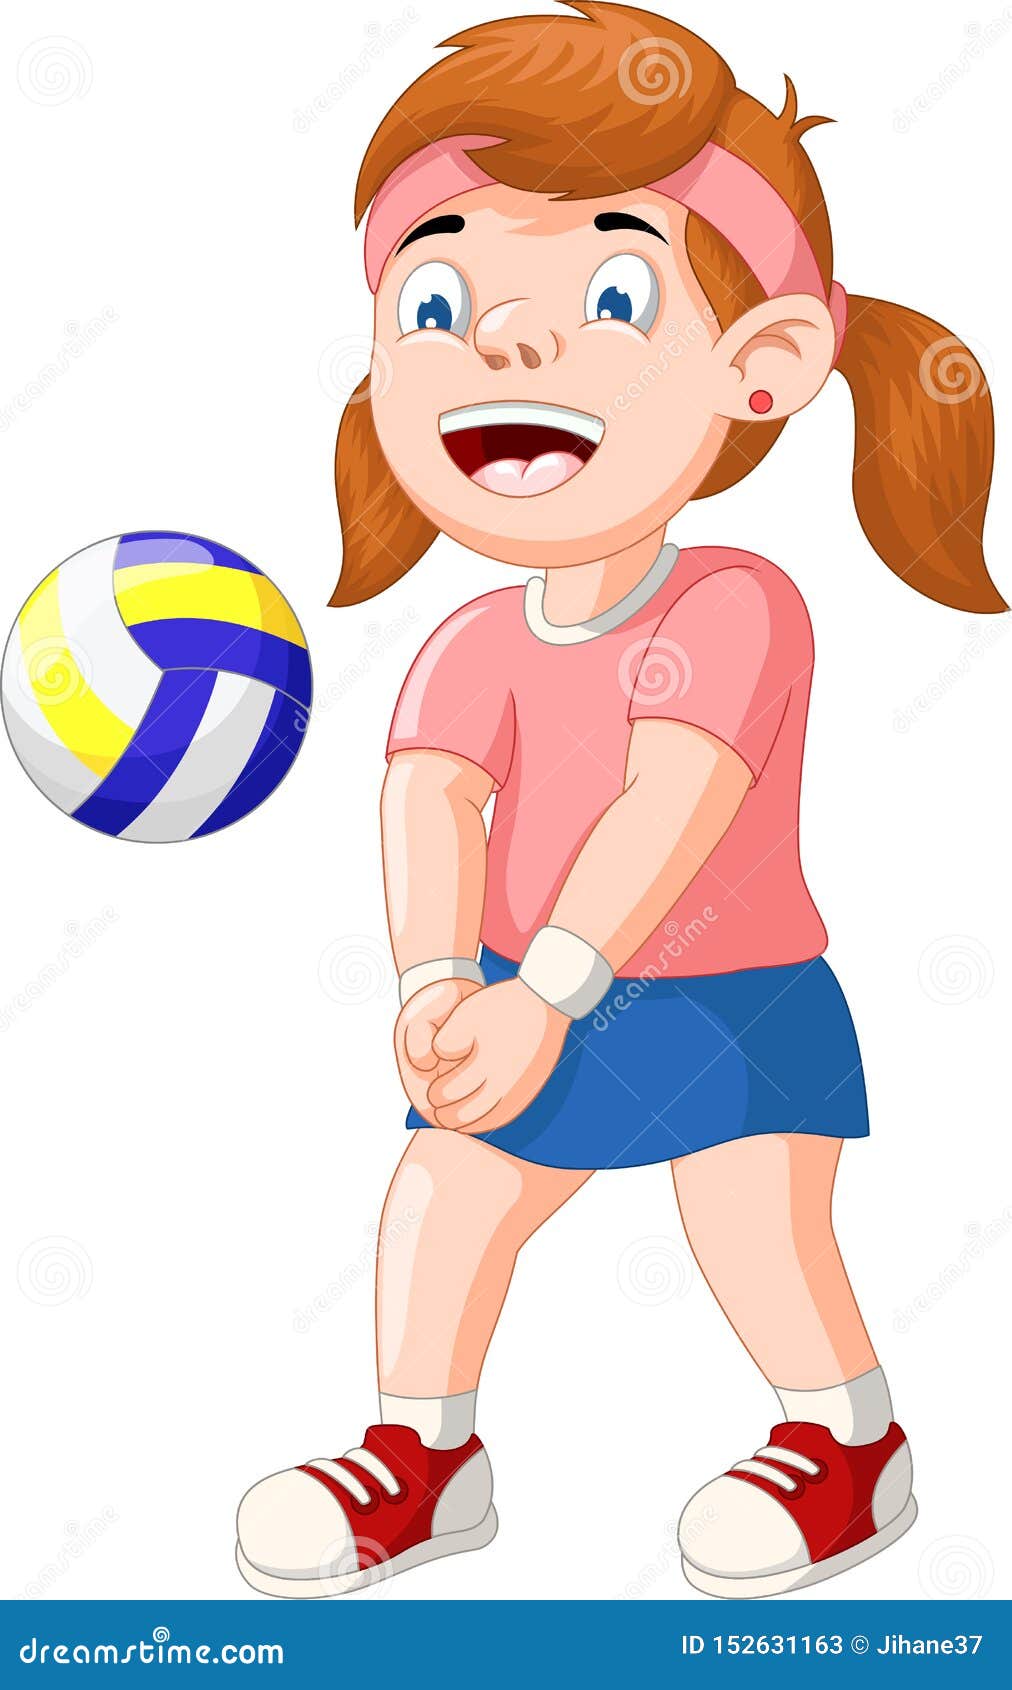 Funny Volleyball Player Cartoon Stock Illustration - Illustration of dress,  shirt: 152631163